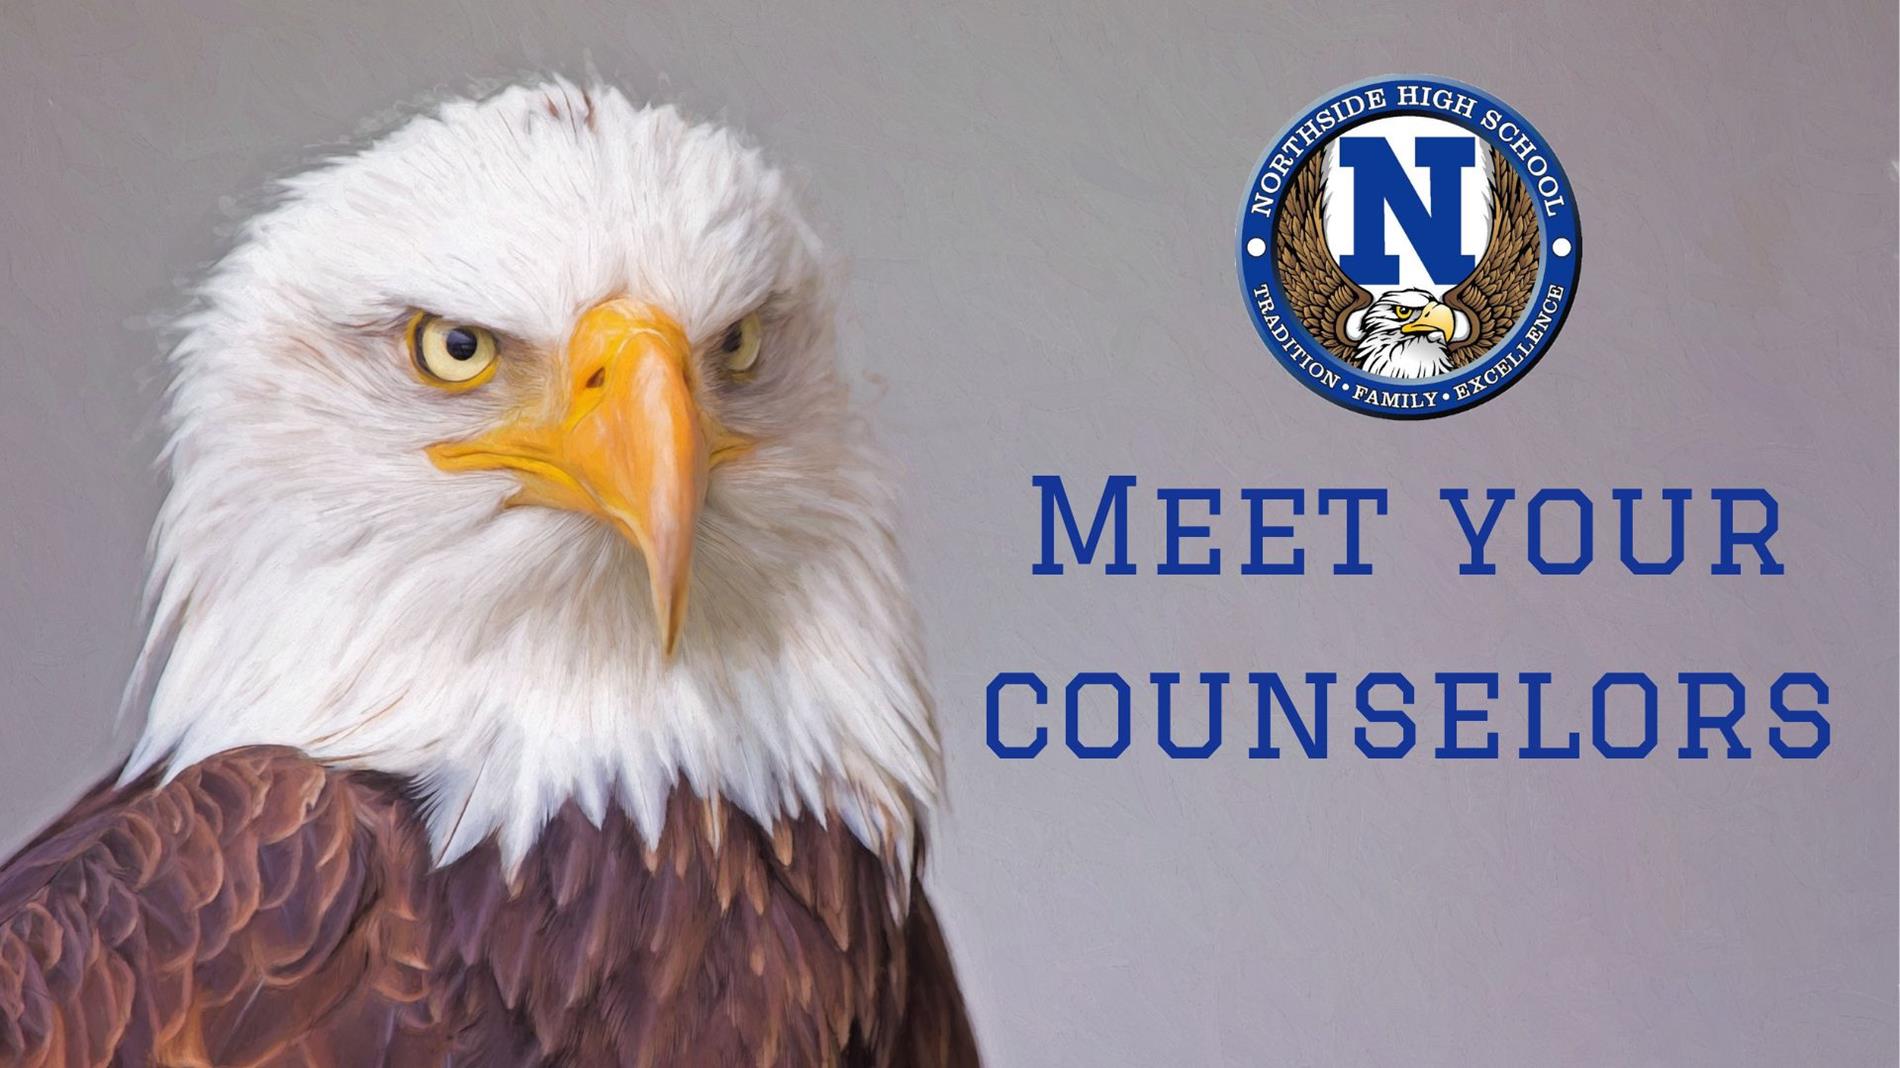 Meet your Counselors